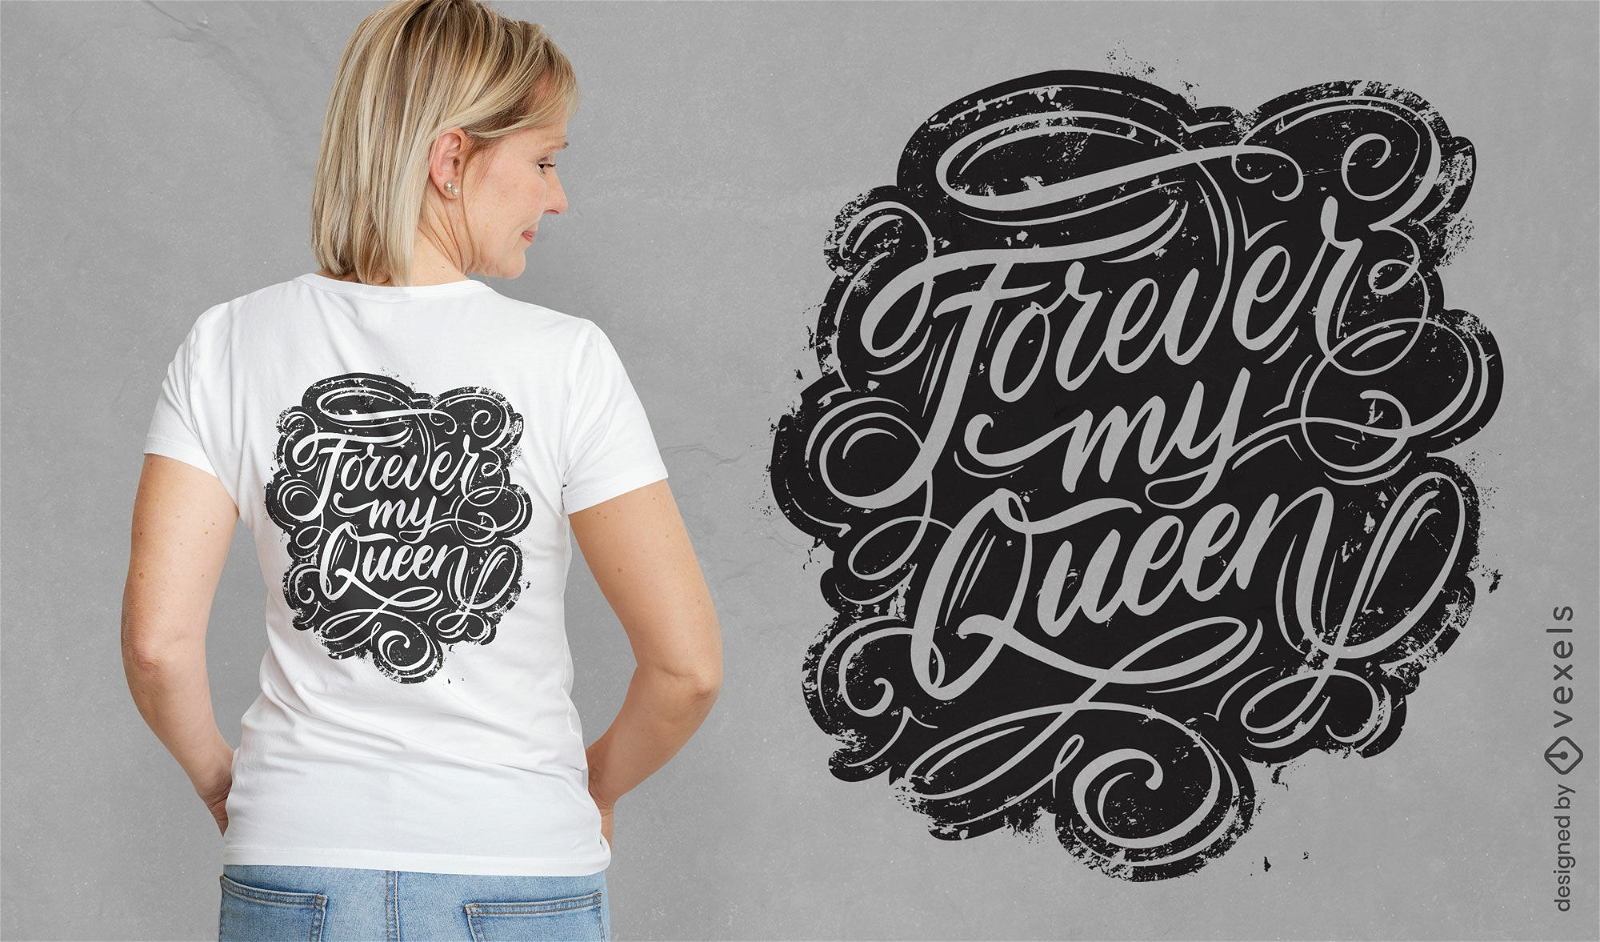 Queen forever lettering t-shirt design